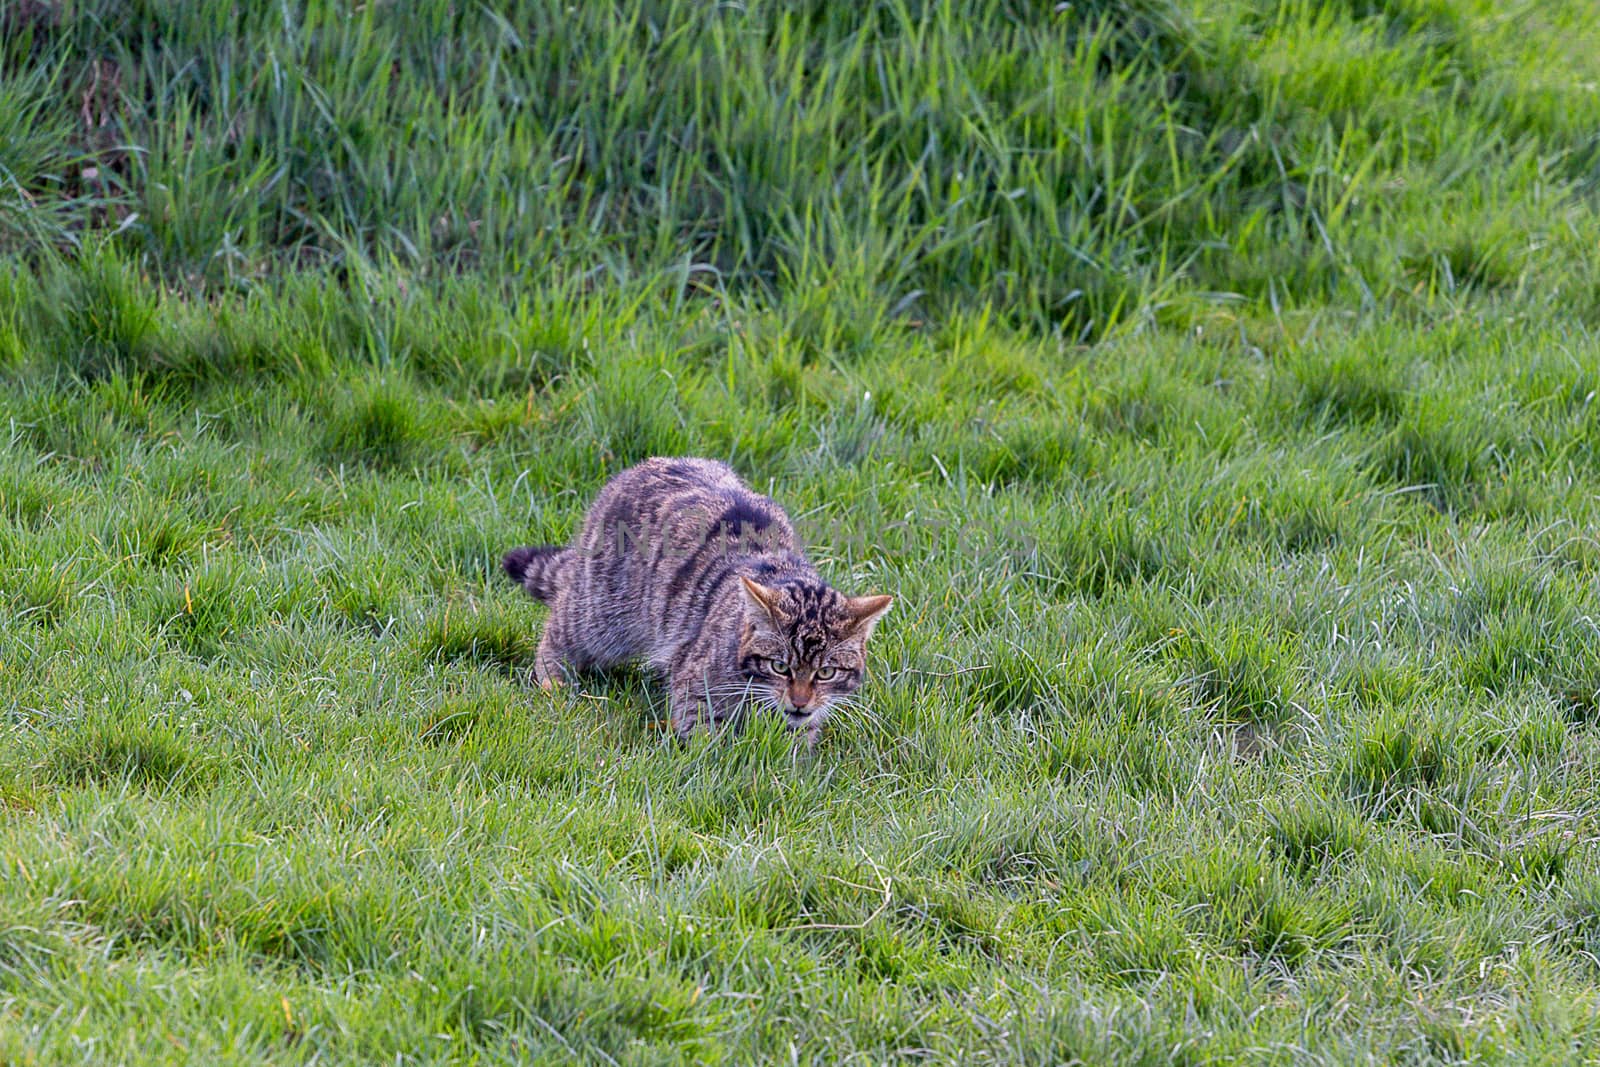 Scottish Wildcat (Felis Silvestris Grampia) stalking in the grass